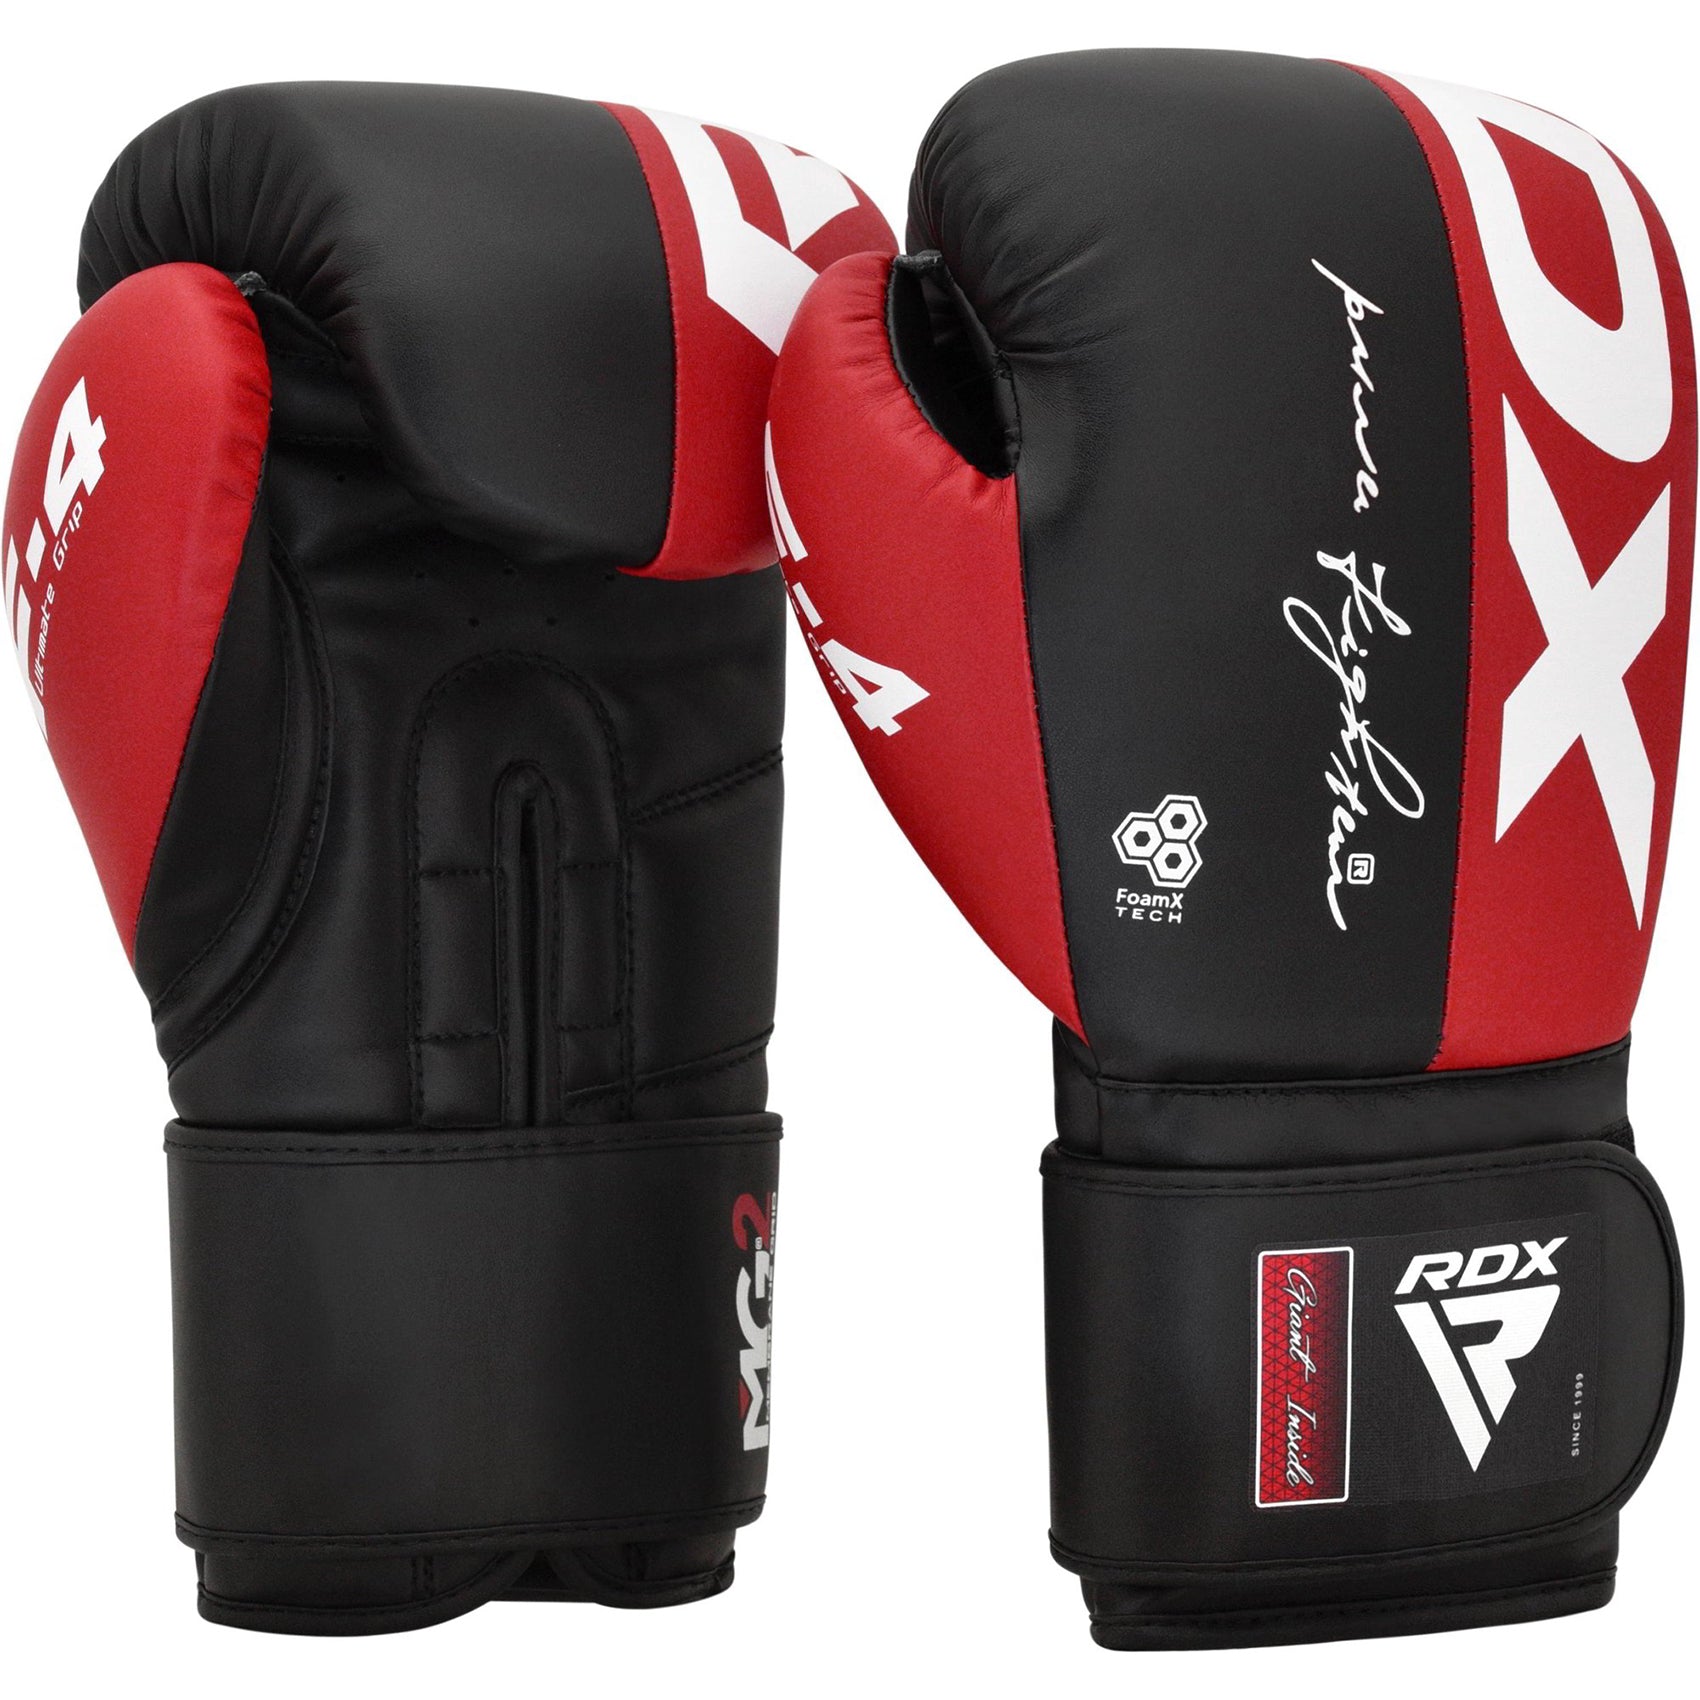 RDX REX F4 MMA, BJJ, Muay Thai, Kickboxing, Training Boxing Gloves - RED/BLACK - 16oz - Pro-Distributing